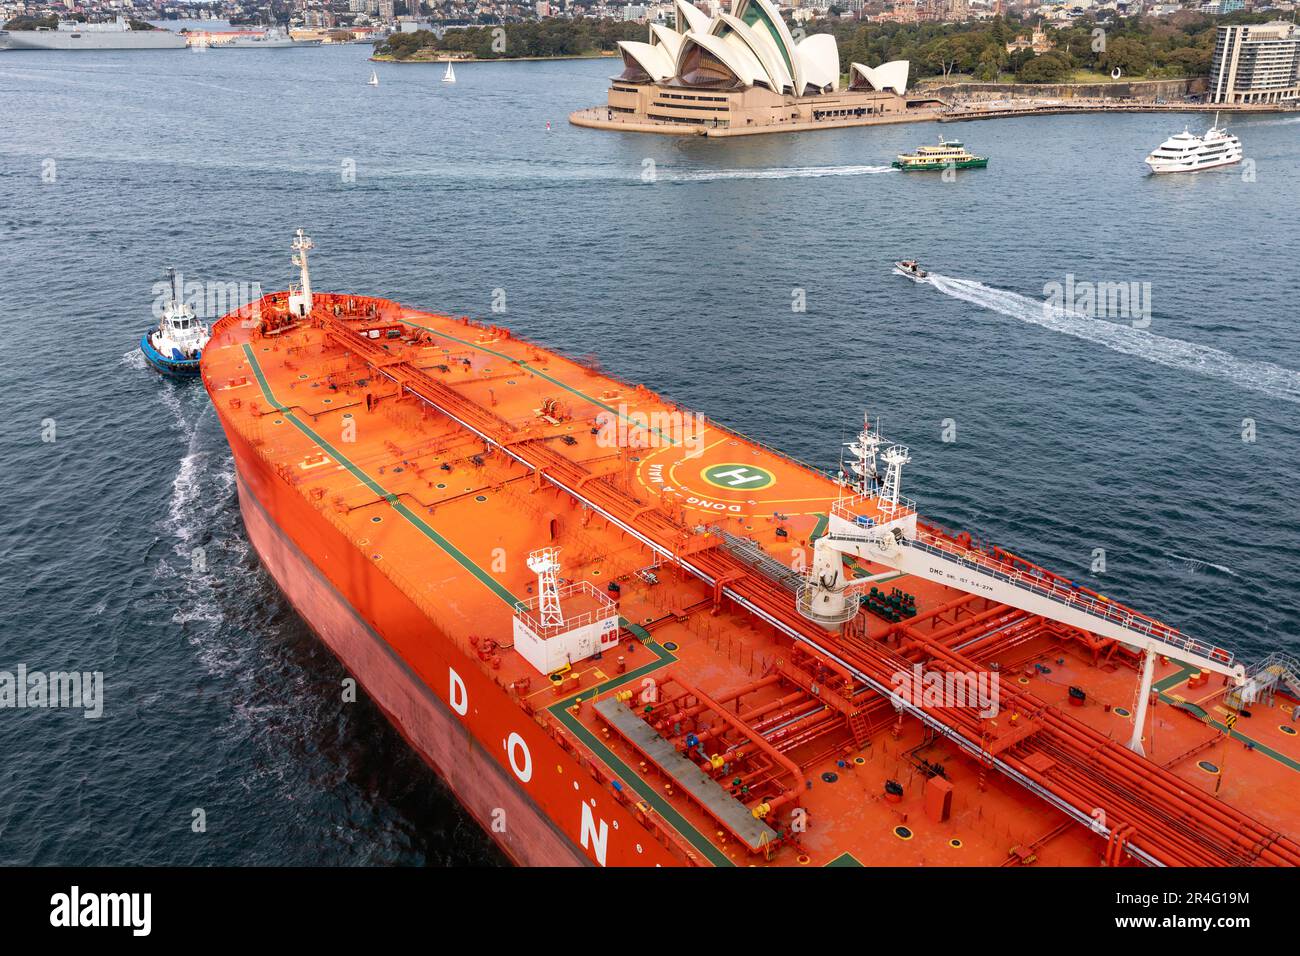 Sydney Harbour large oil tanker Dong a Maia travelling under Panama flag head towards Sydney opera house and garden island naval base,Sydney,Australia Stock Photo